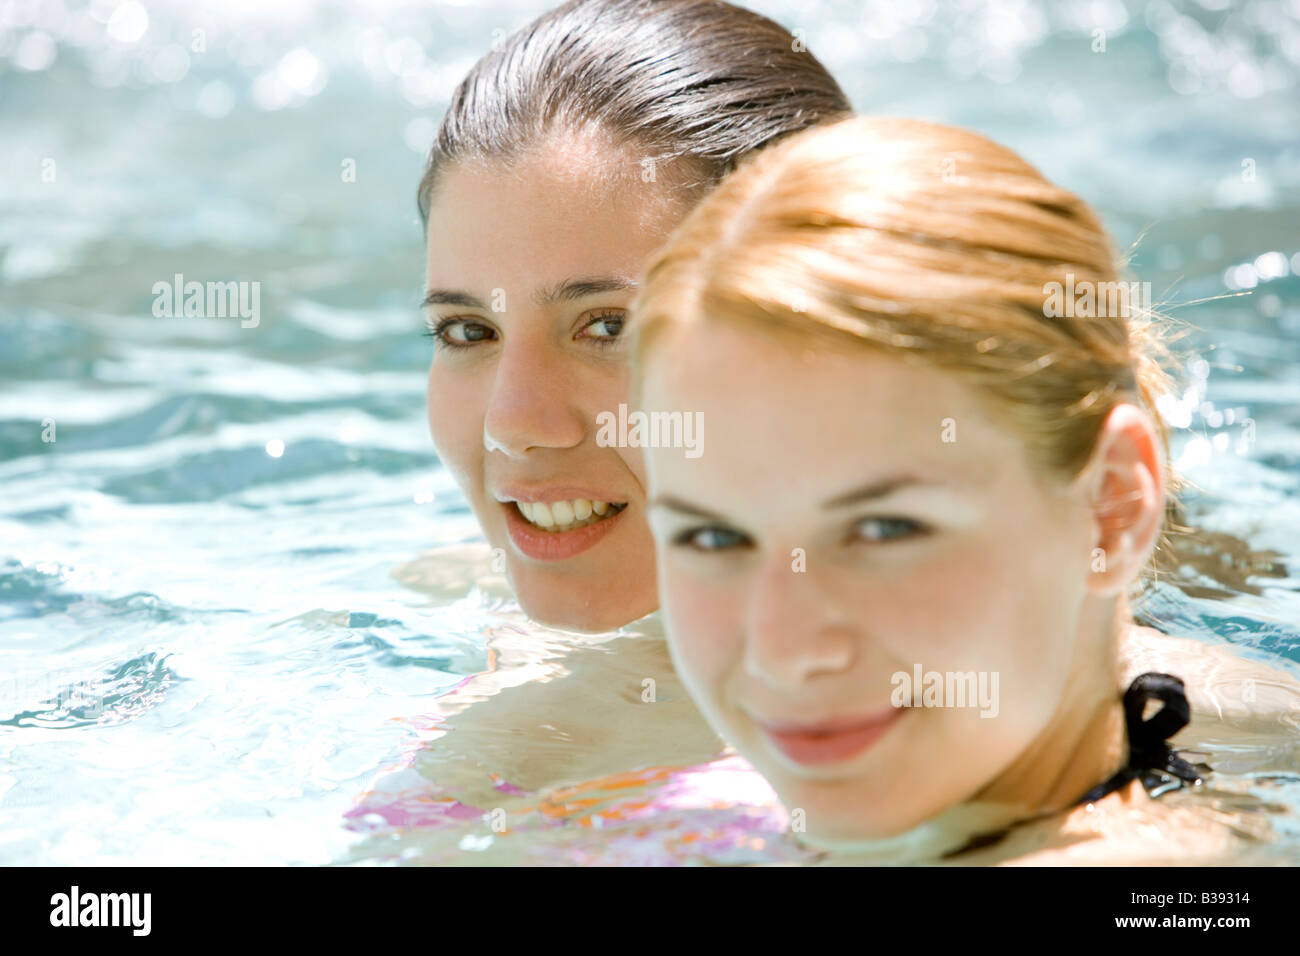 Zwei junge Frauen entspannen sich in einem Whirlpool, two young women relaxes in a Whirlpool Stock Photo